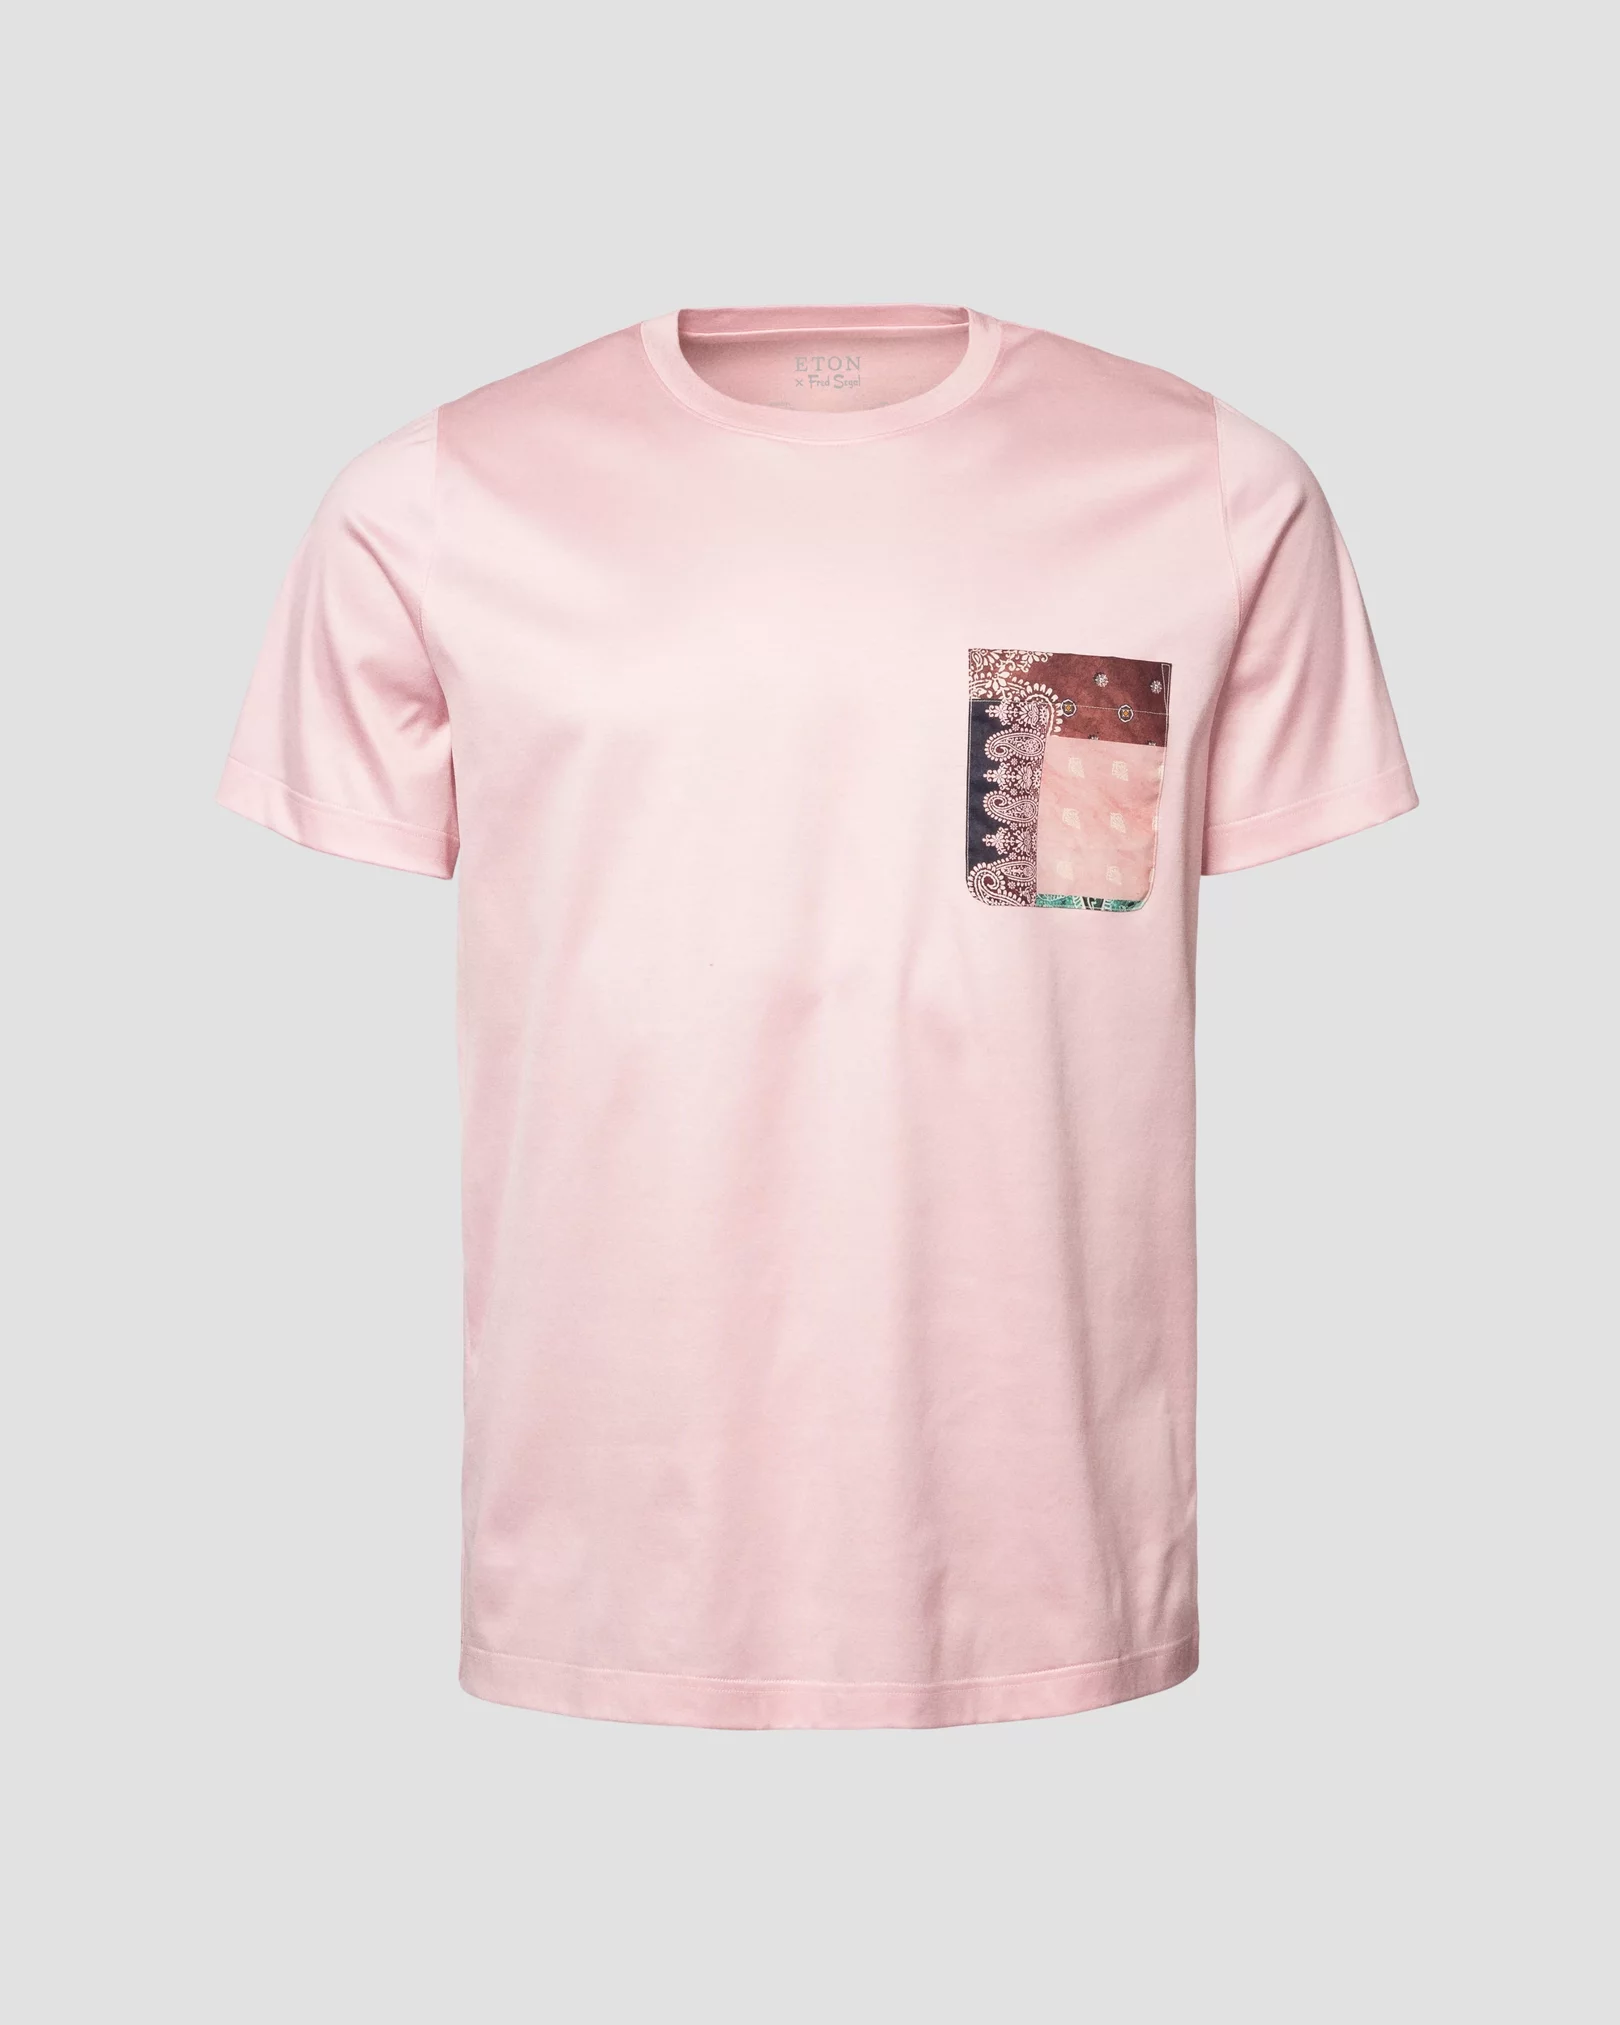 Eton - pink jersey t shirt short sleeve